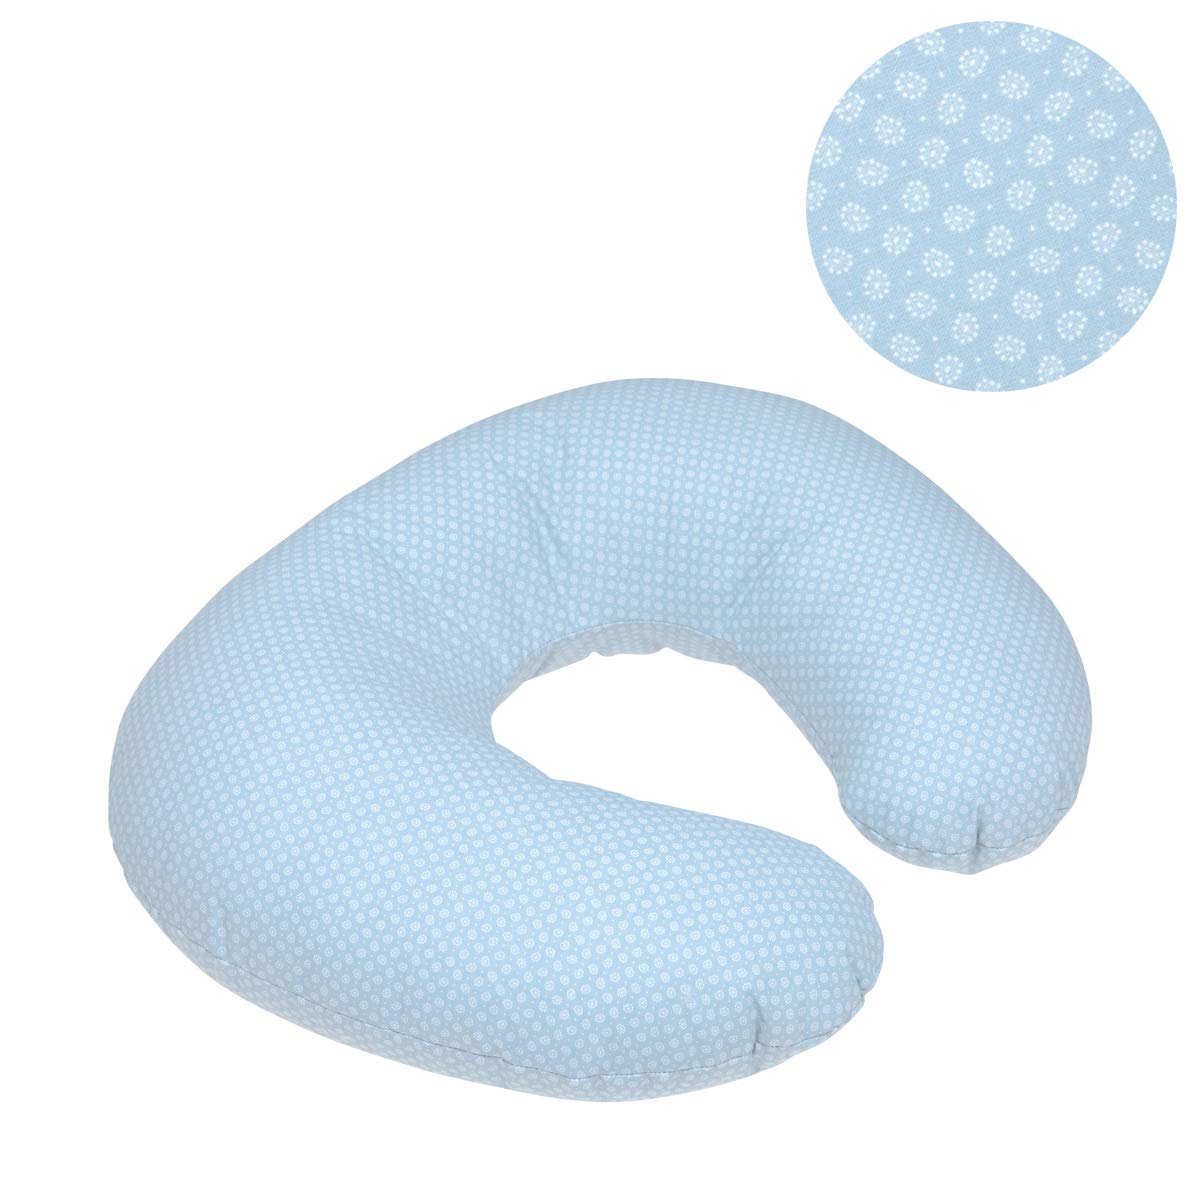 Cambrass Nursing Pillow, 53 x 45 x 10 cm, Astra